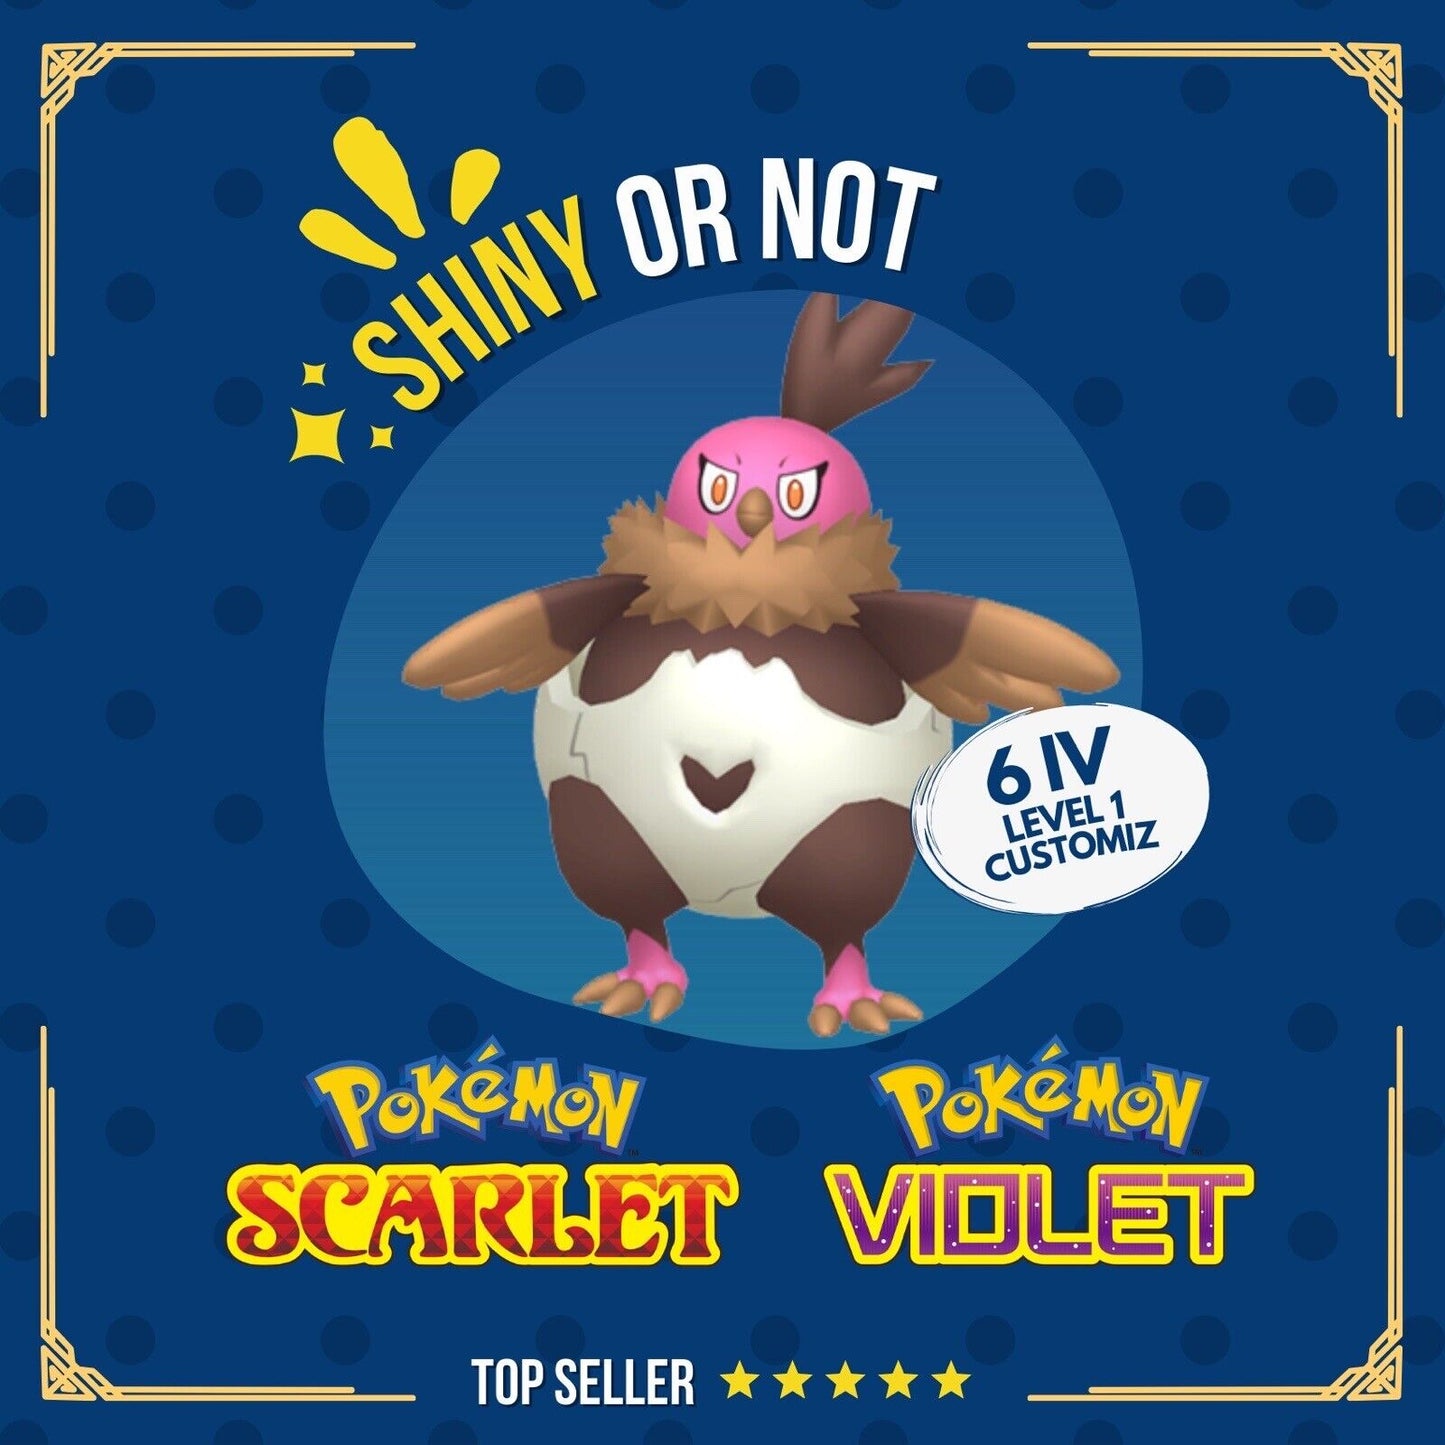 Vullaby Shiny or Non ✨ 6 IV Customizable Nature Level OT Pokémon Scarlet Violet by Shiny Living Dex | Shiny Living Dex